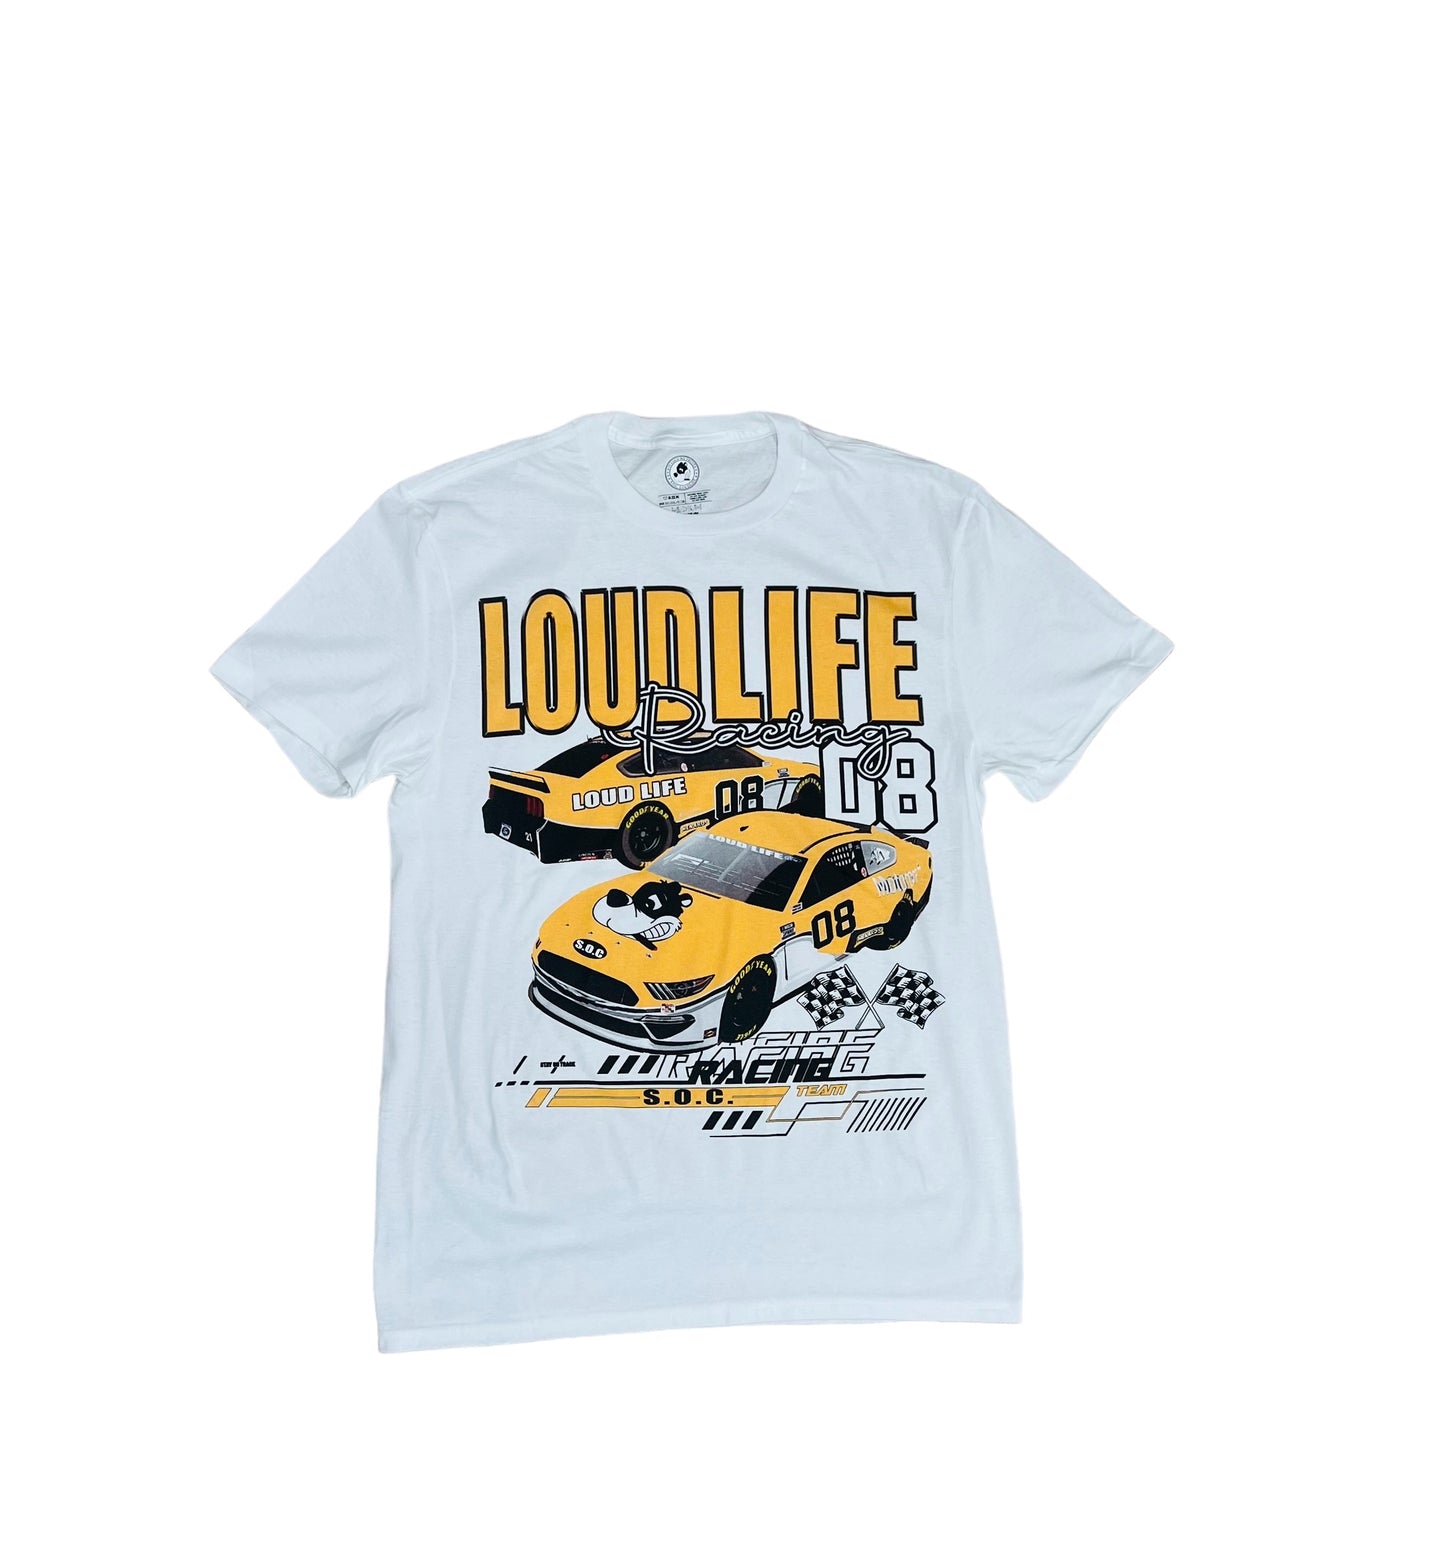 Loudlife Racing Tee